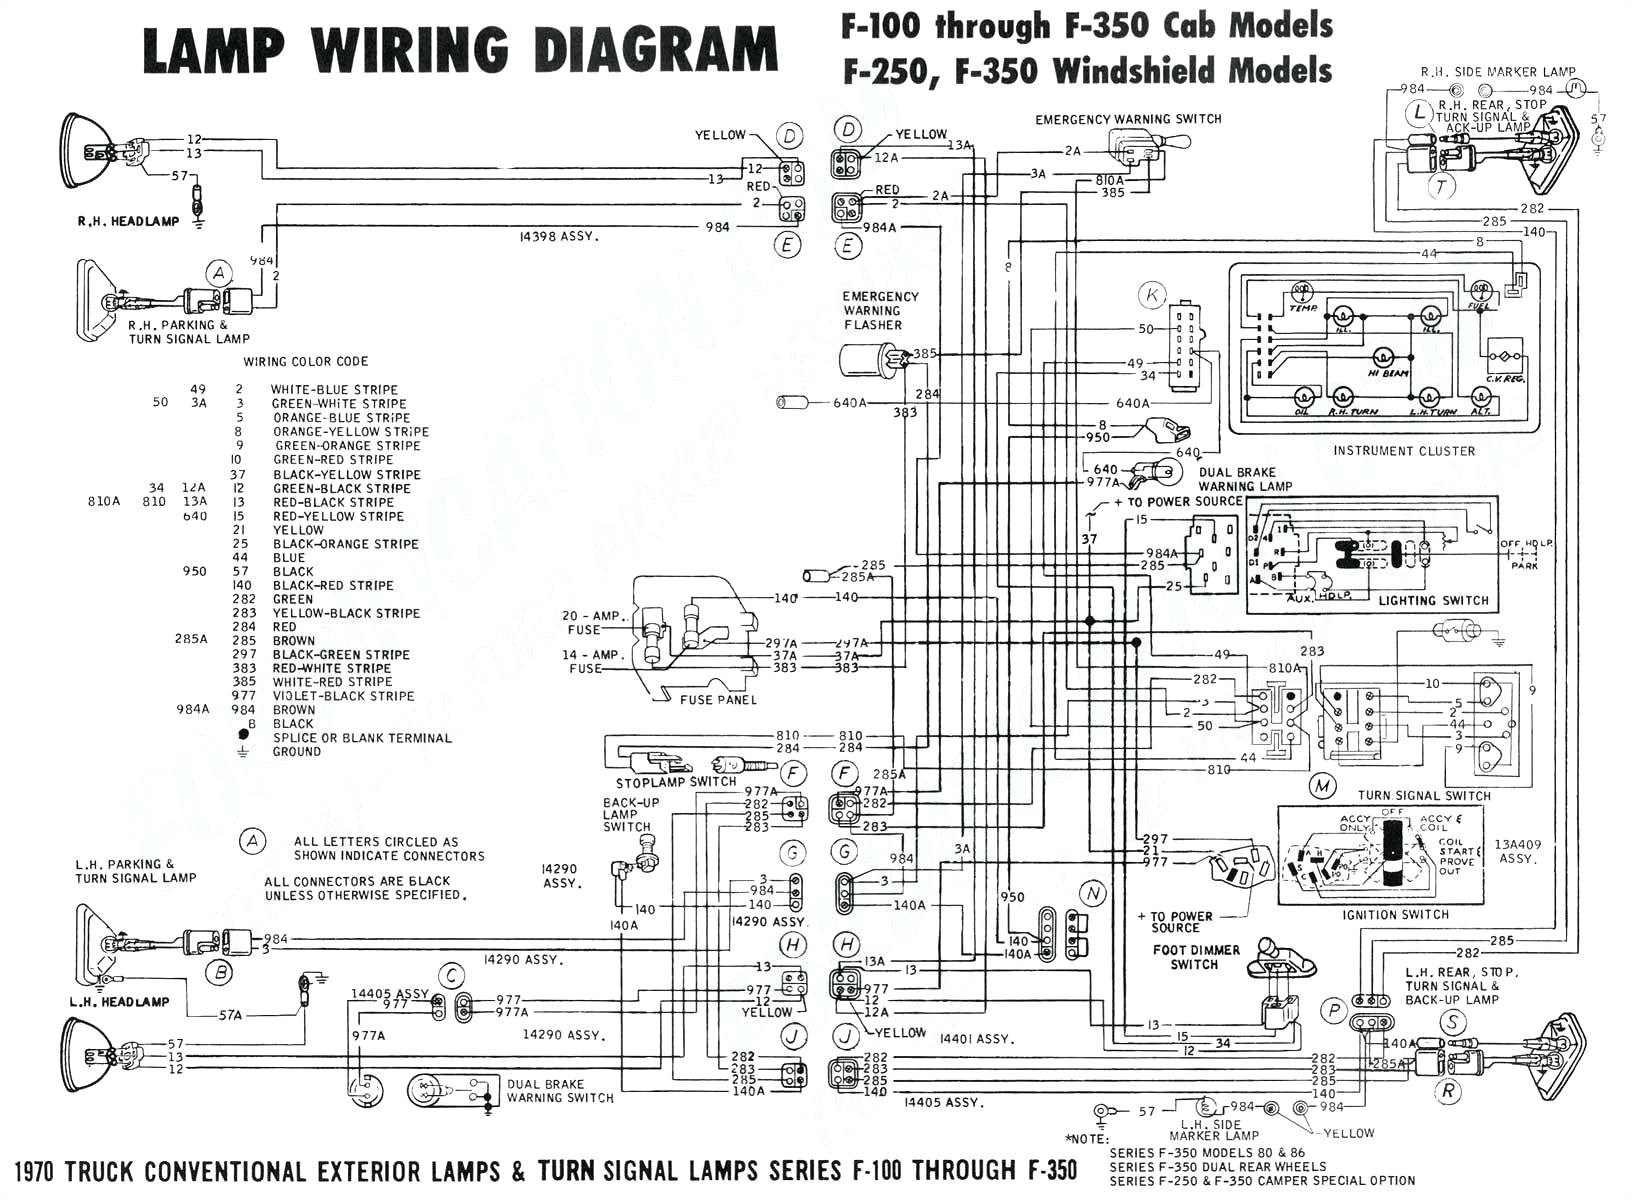 diagram besides kenworth truck tail light wiring on grote 5371 diagram besides kenworth truck tail light wiring on grote 5371 wiring